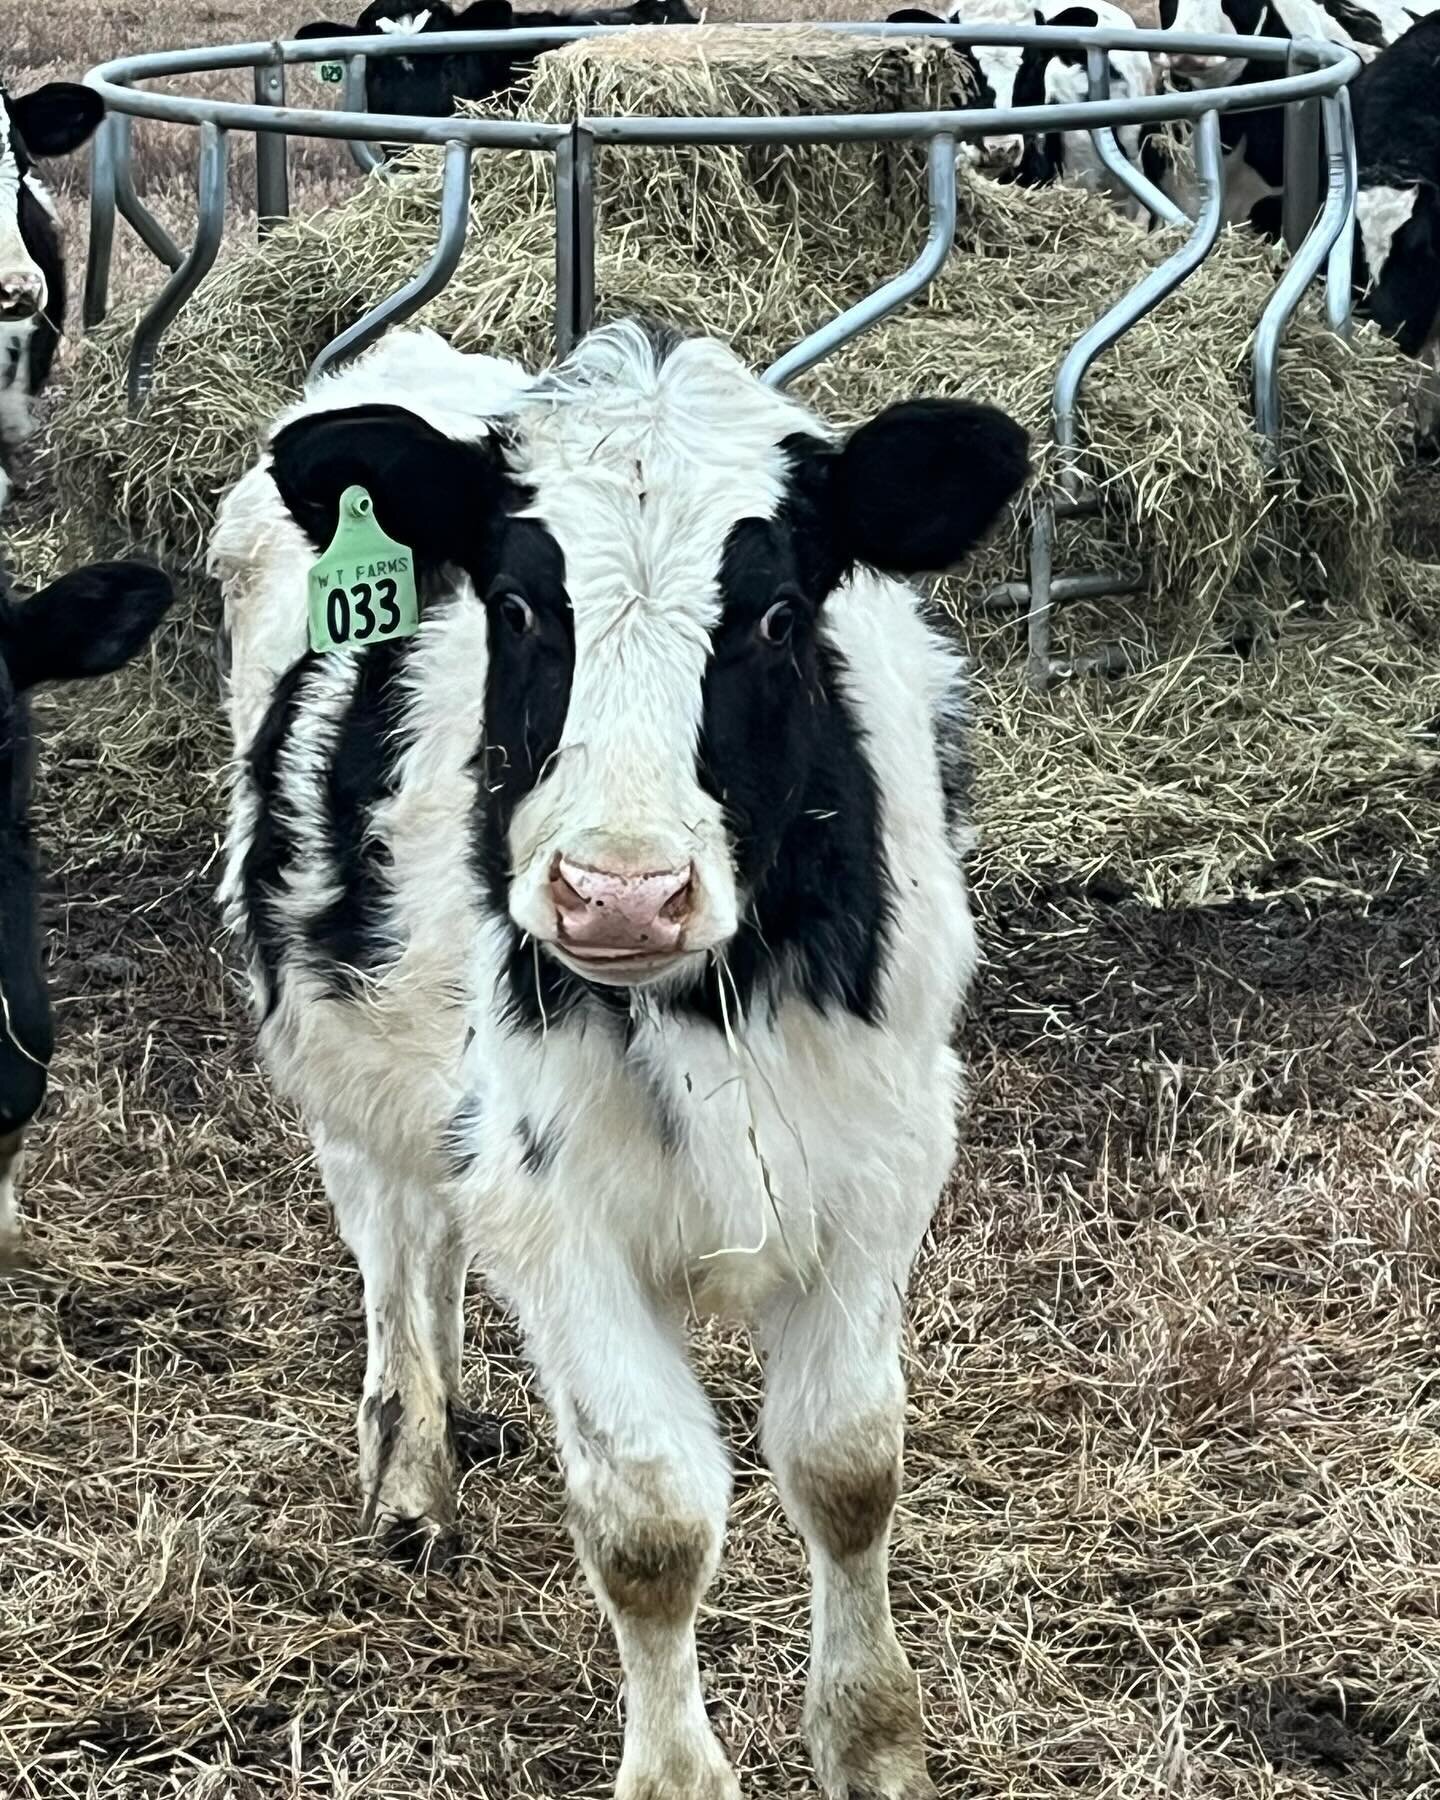 Cows are appreciative of the mild winter. Makes for fat and happy boys.